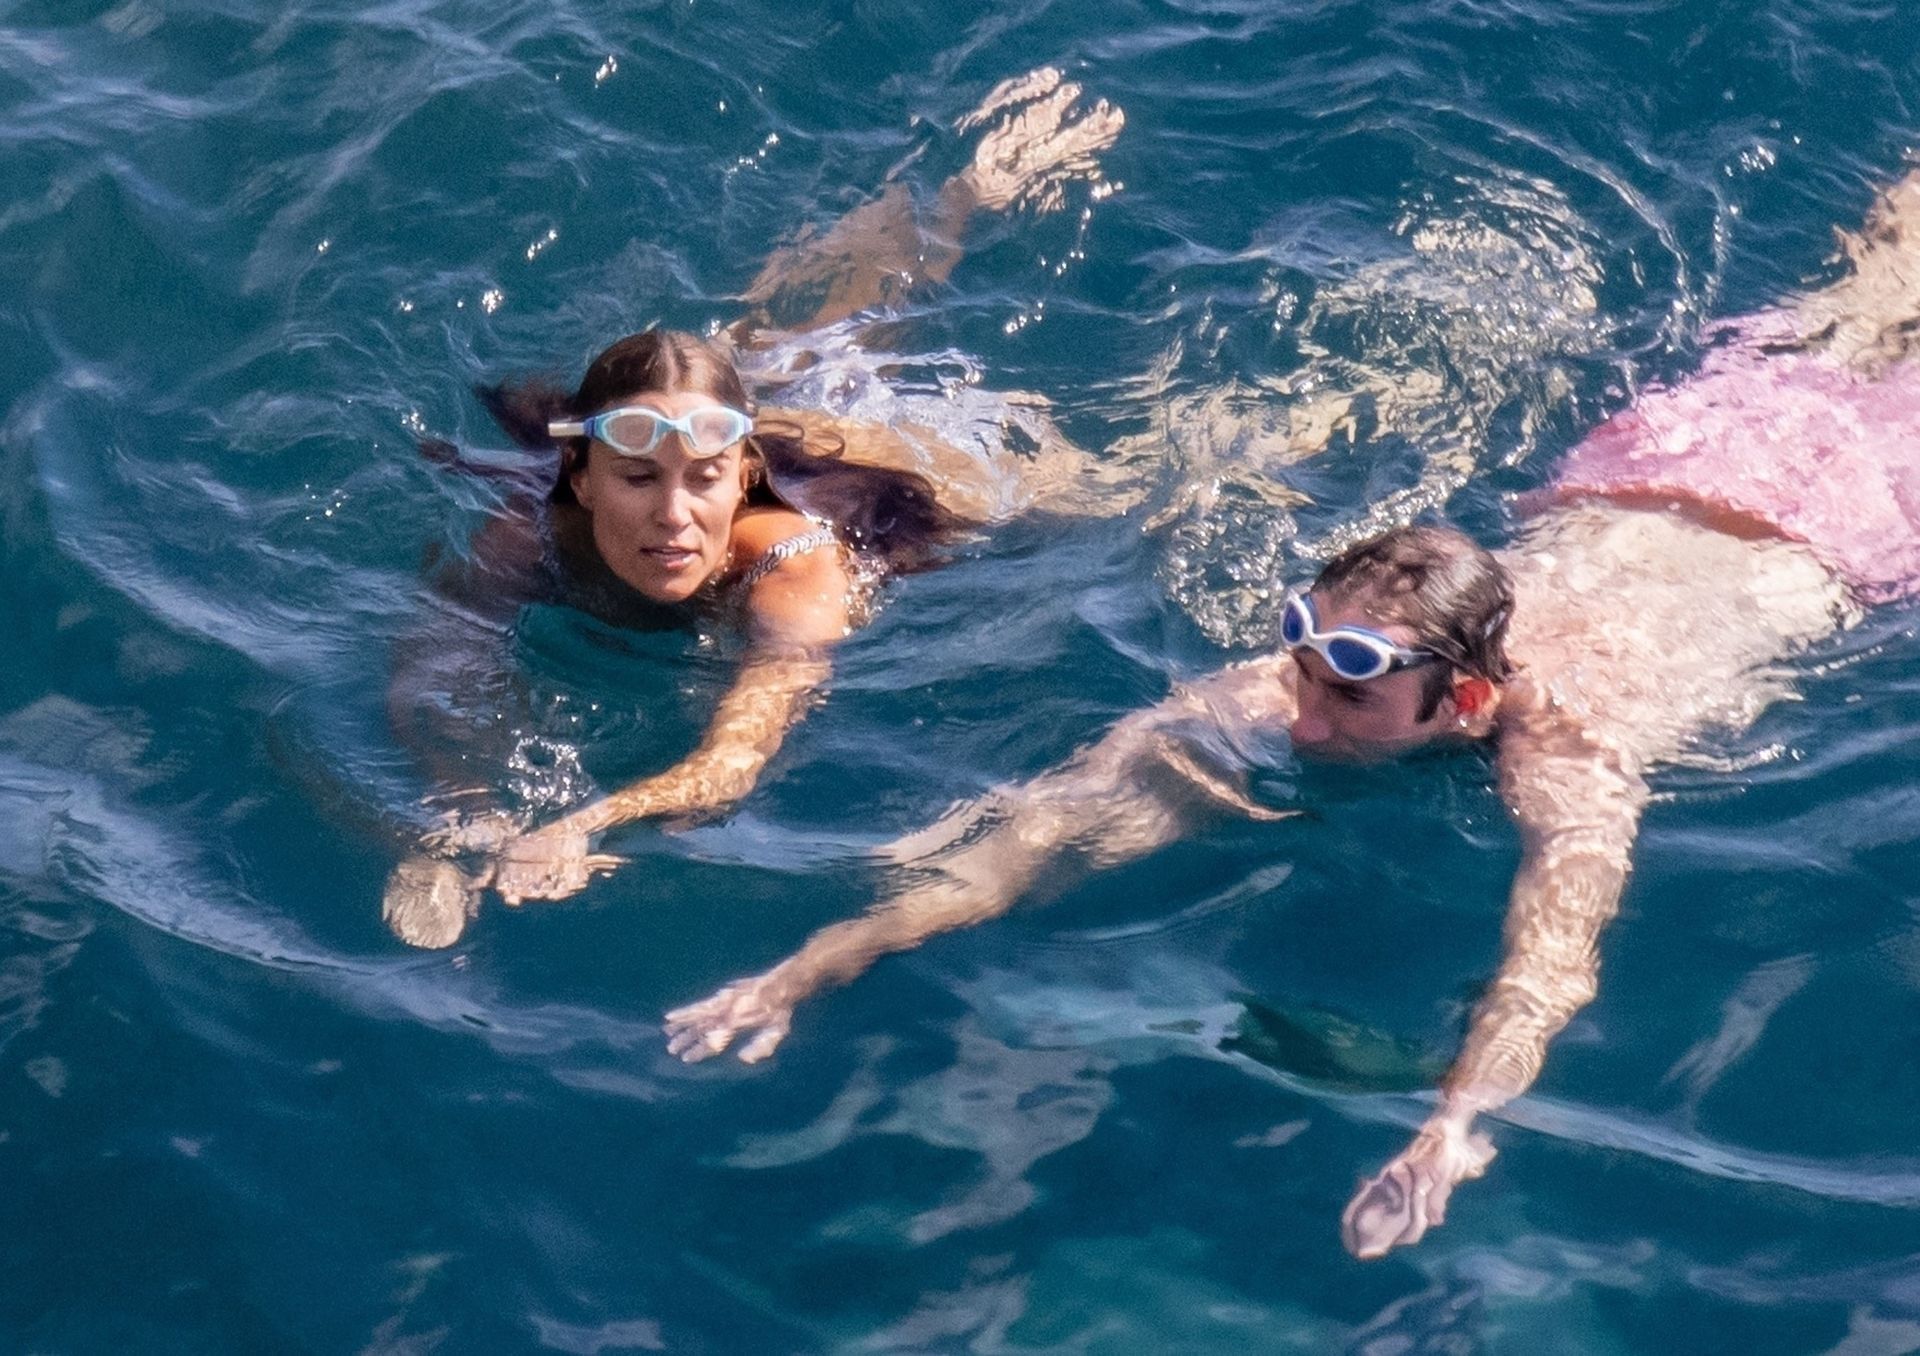 Pippa Middleton & James Matthews Tan It Up on Their Holidays Out in Positano (75 Photos)